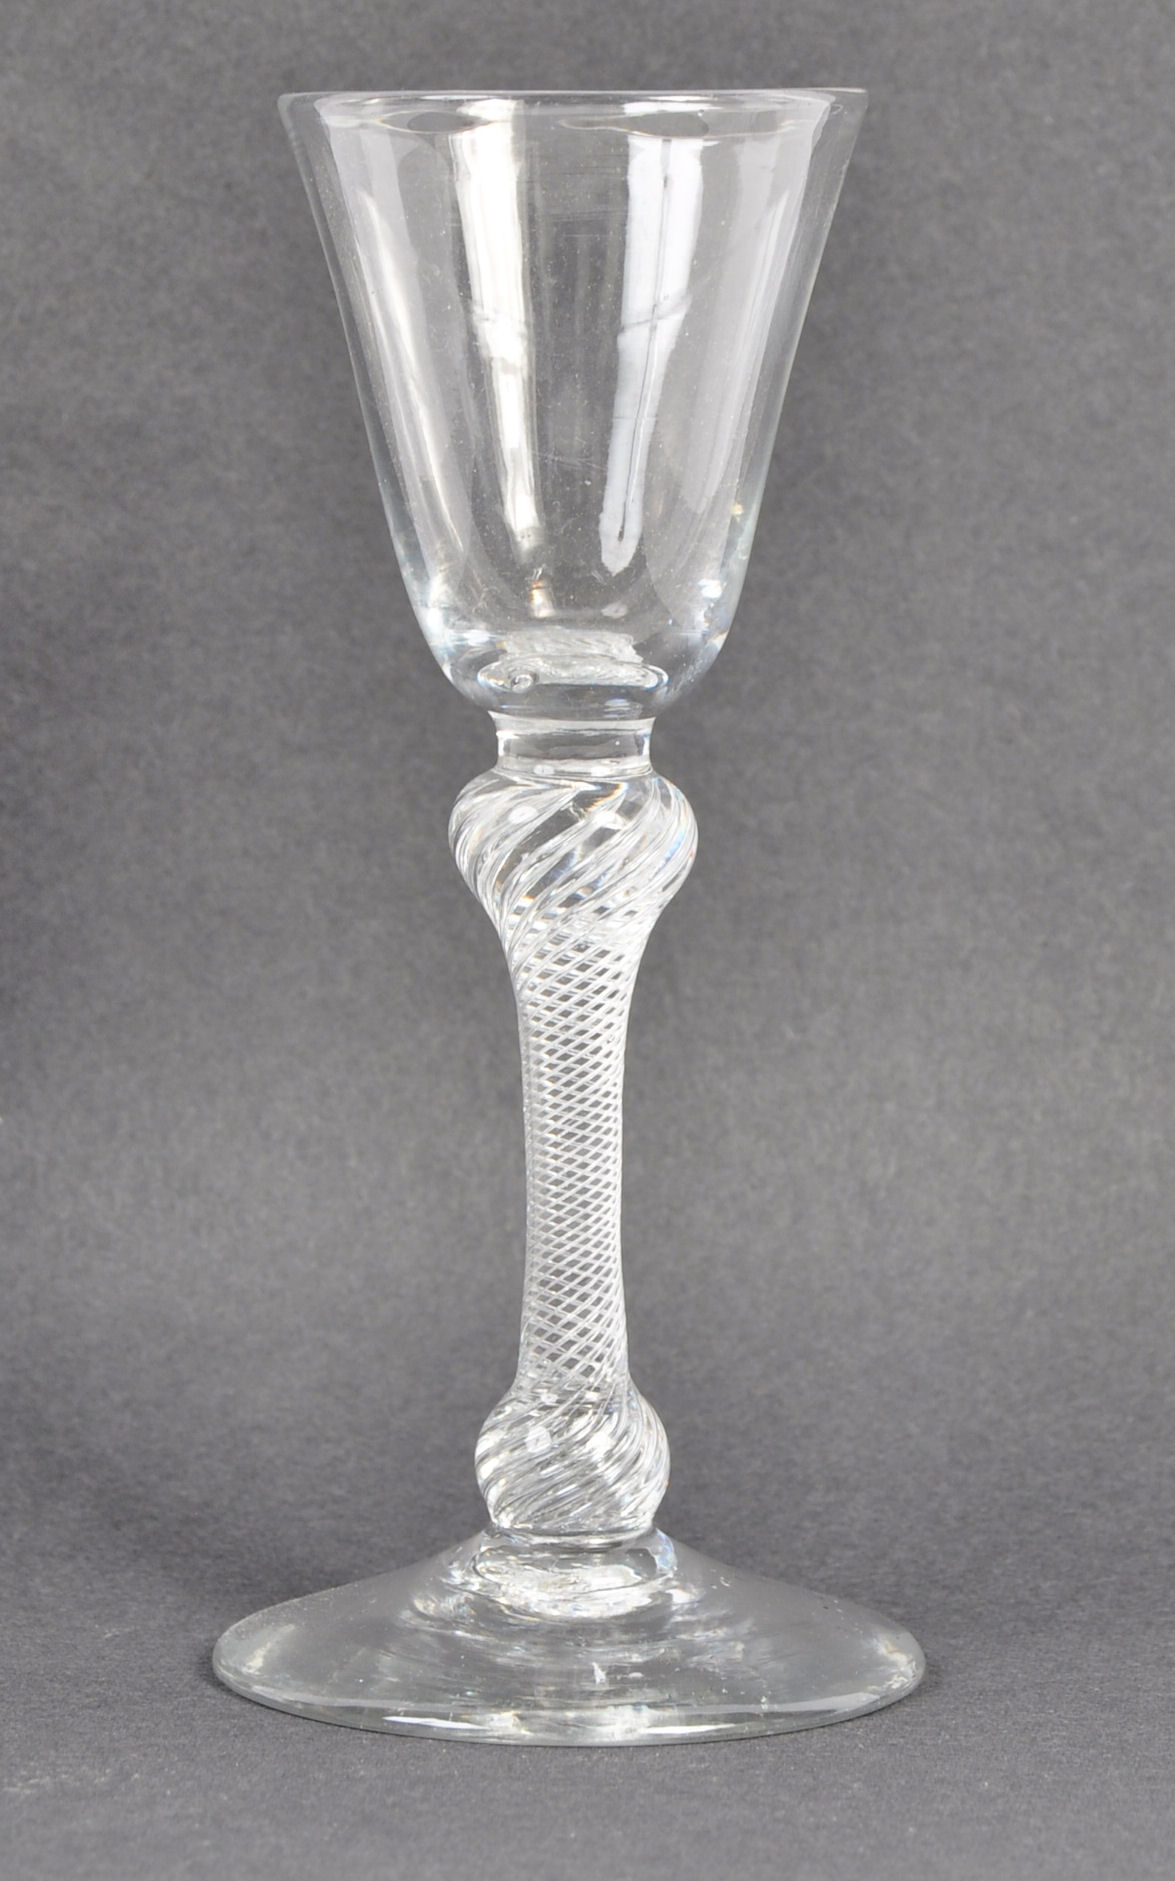 STUNNING MID 18TH CENTURY GEORGIAN AIR TWIST STEM WINE GLASS